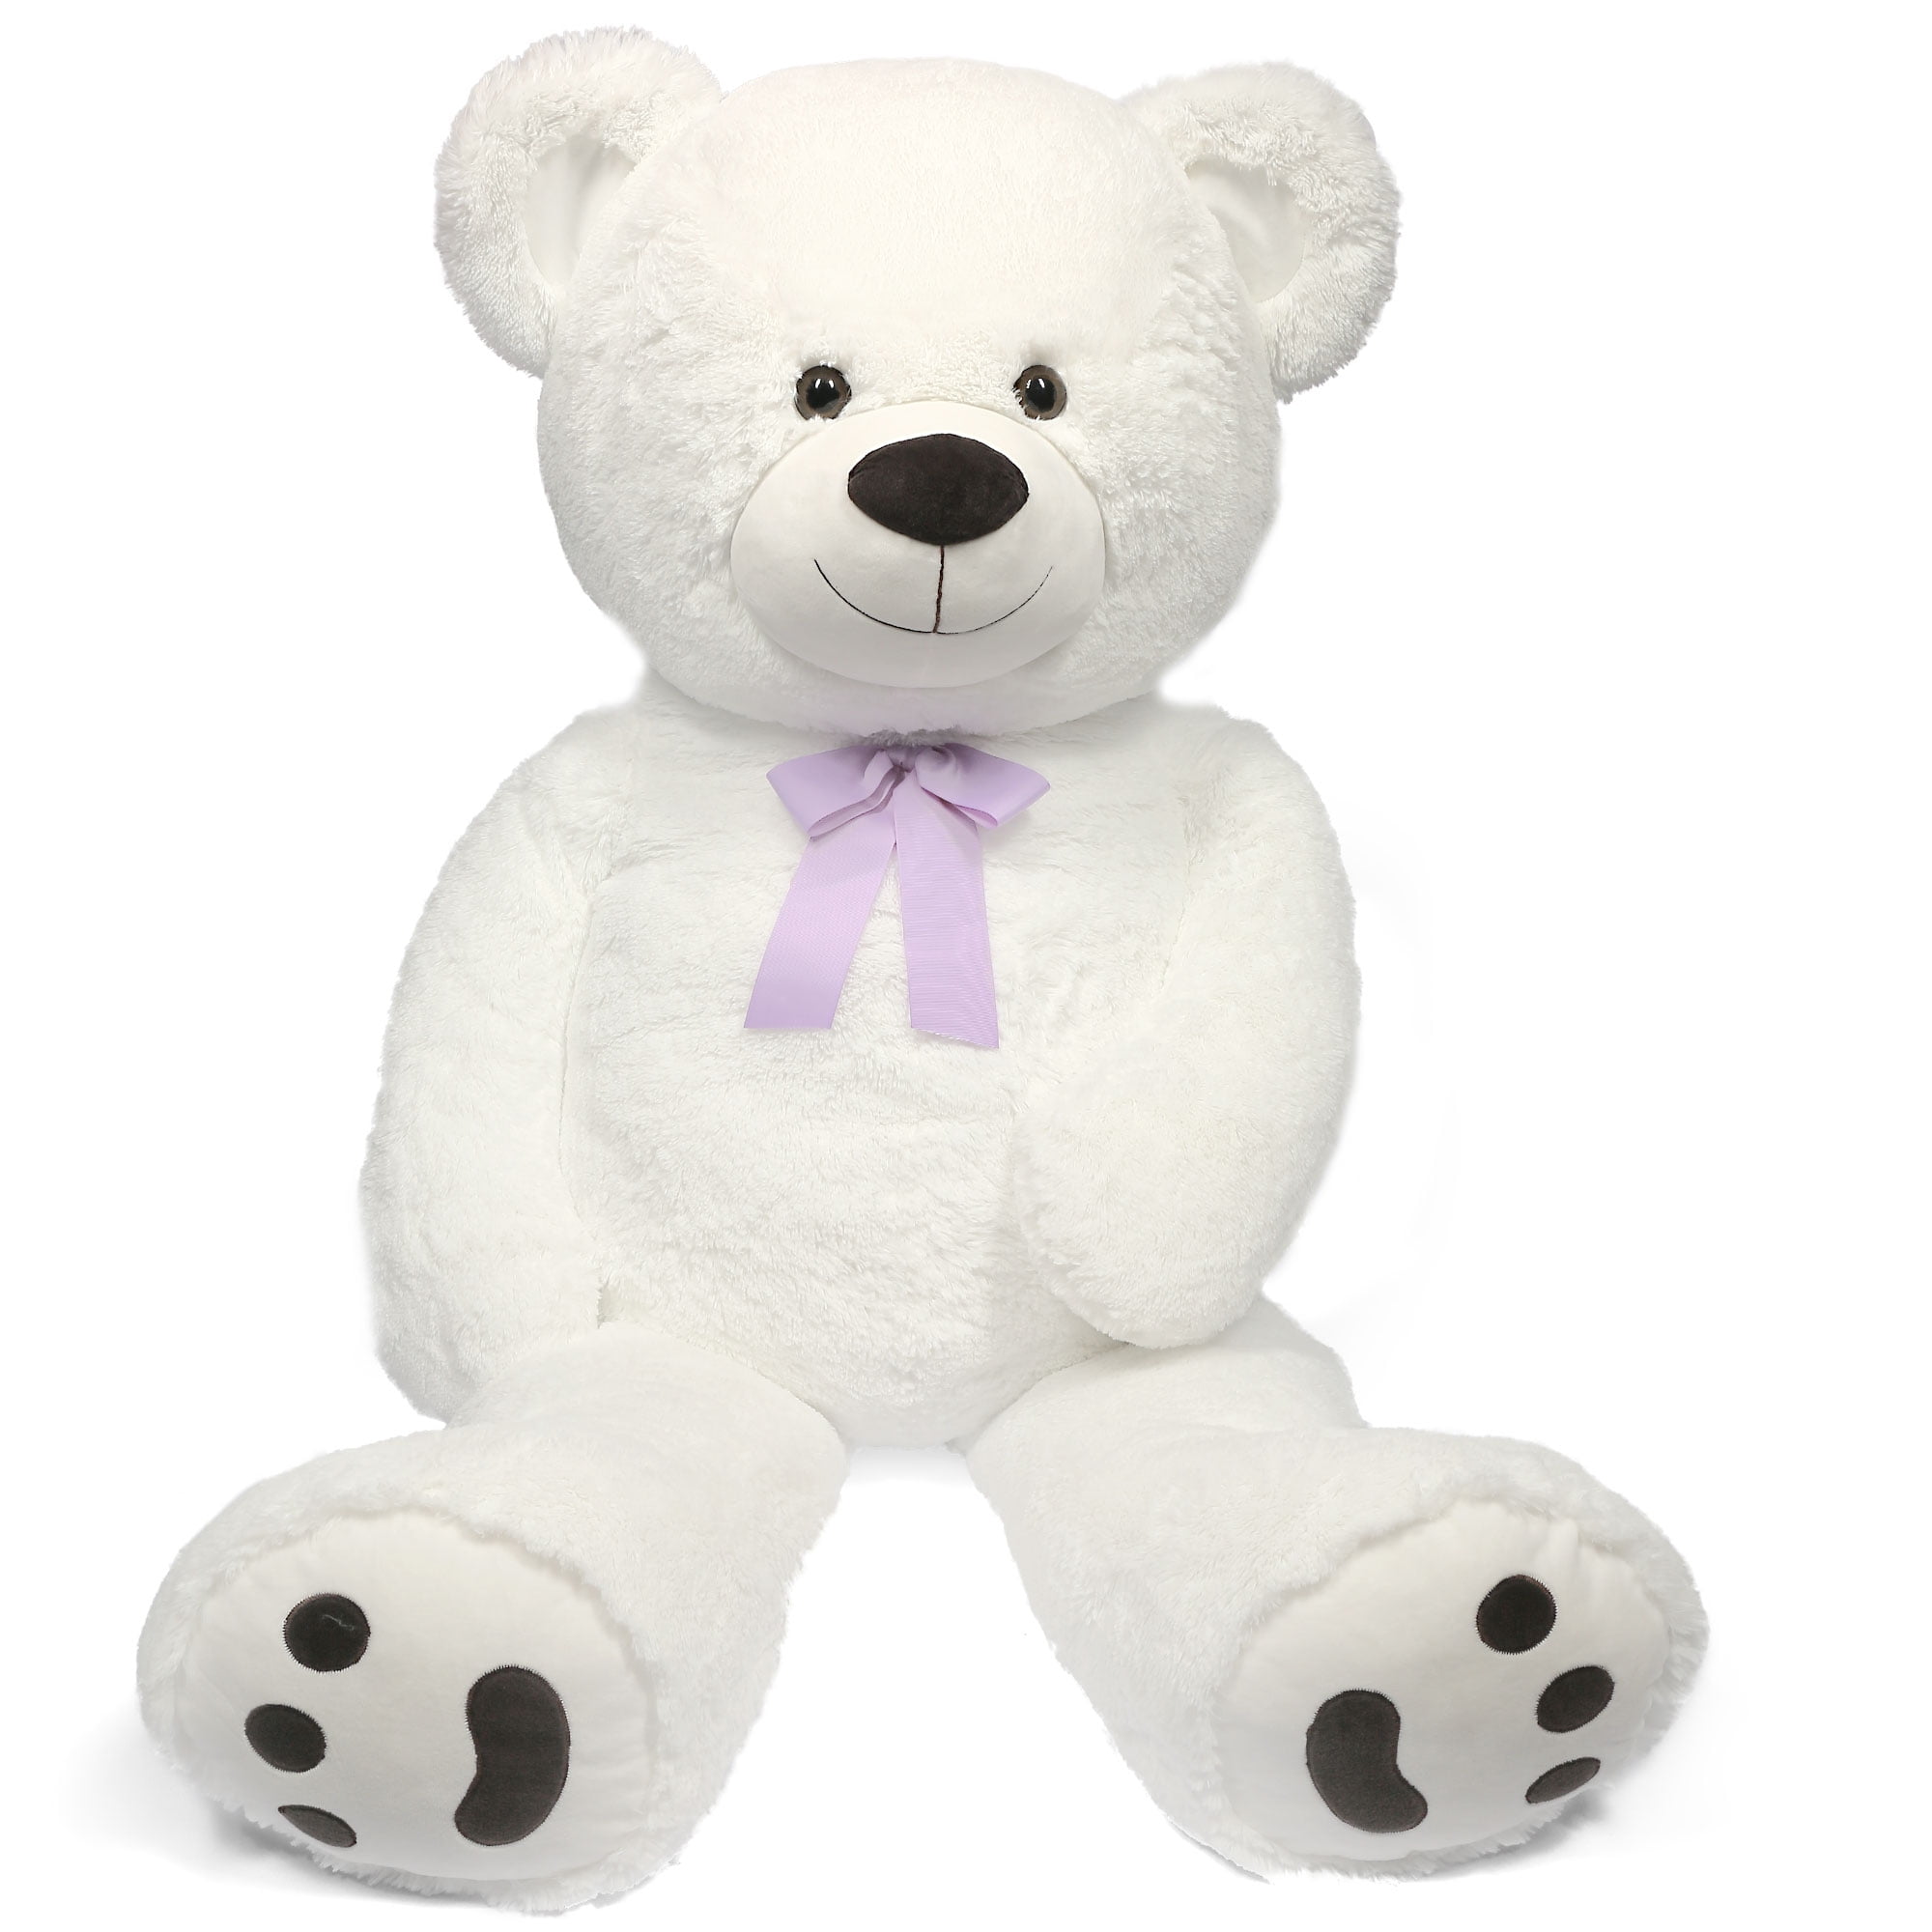 4FT White Teddy Bear Stuffed Animals Plush Toys Child Kids Girls Birthday Gifts 